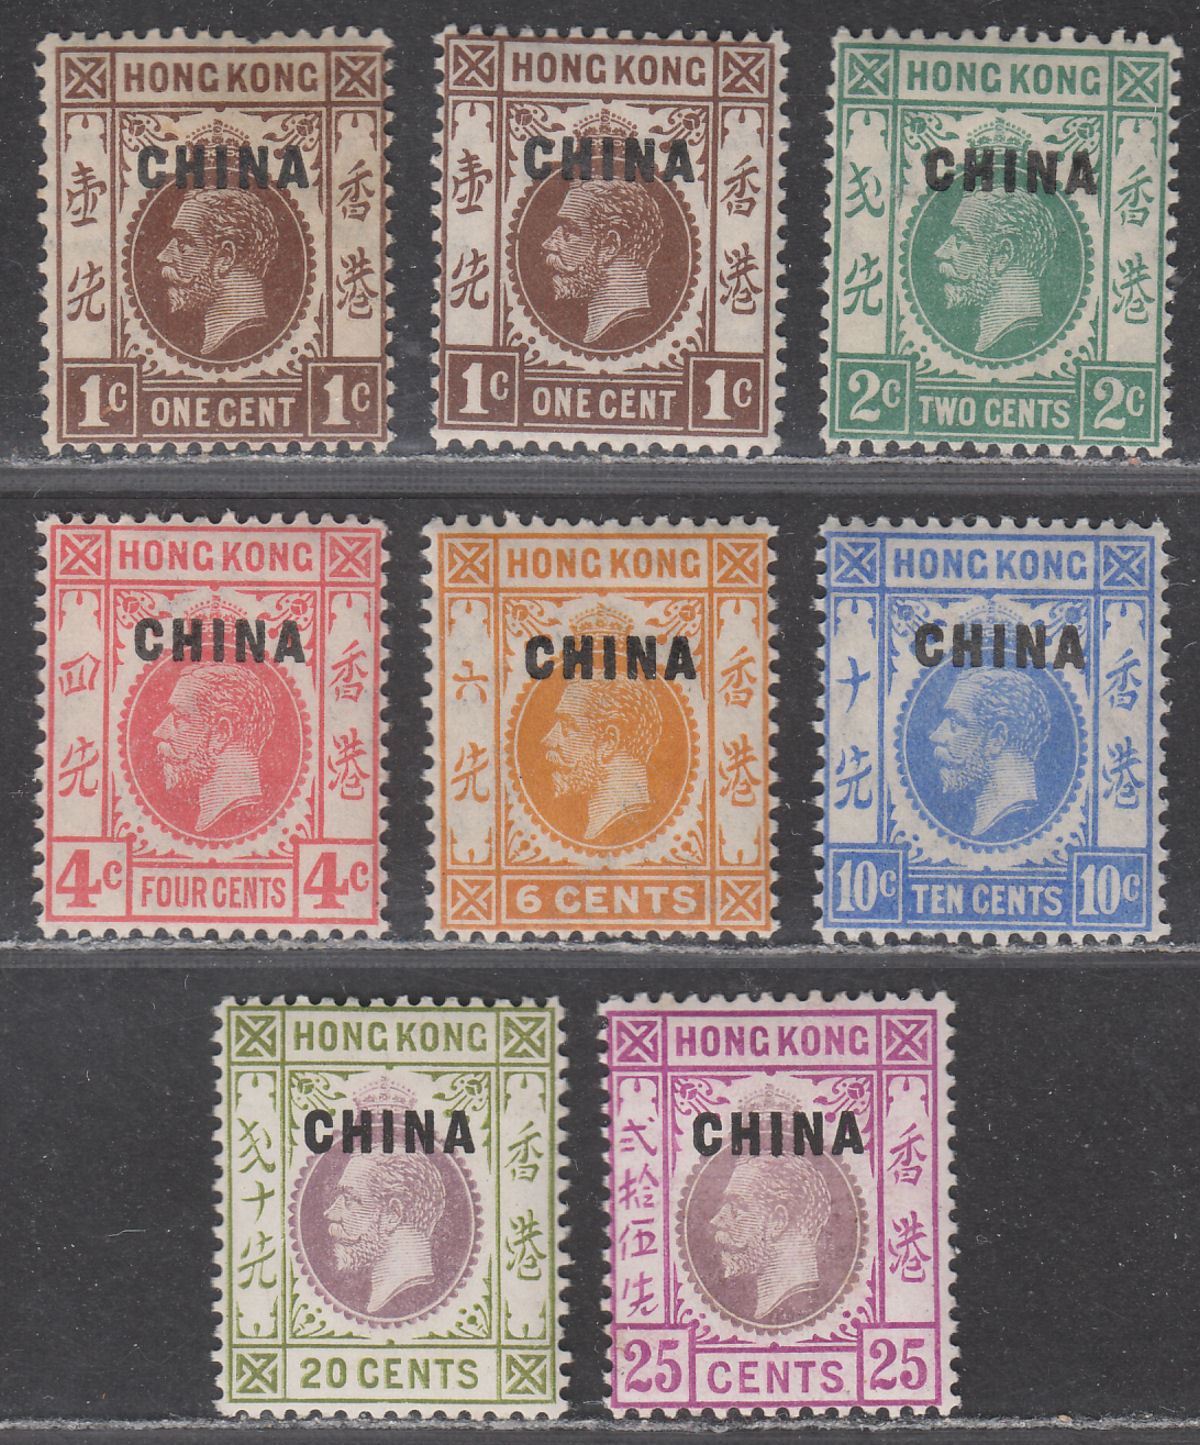 Hong Kong 1922 KGV China Overprint Part Set to 25c Mint